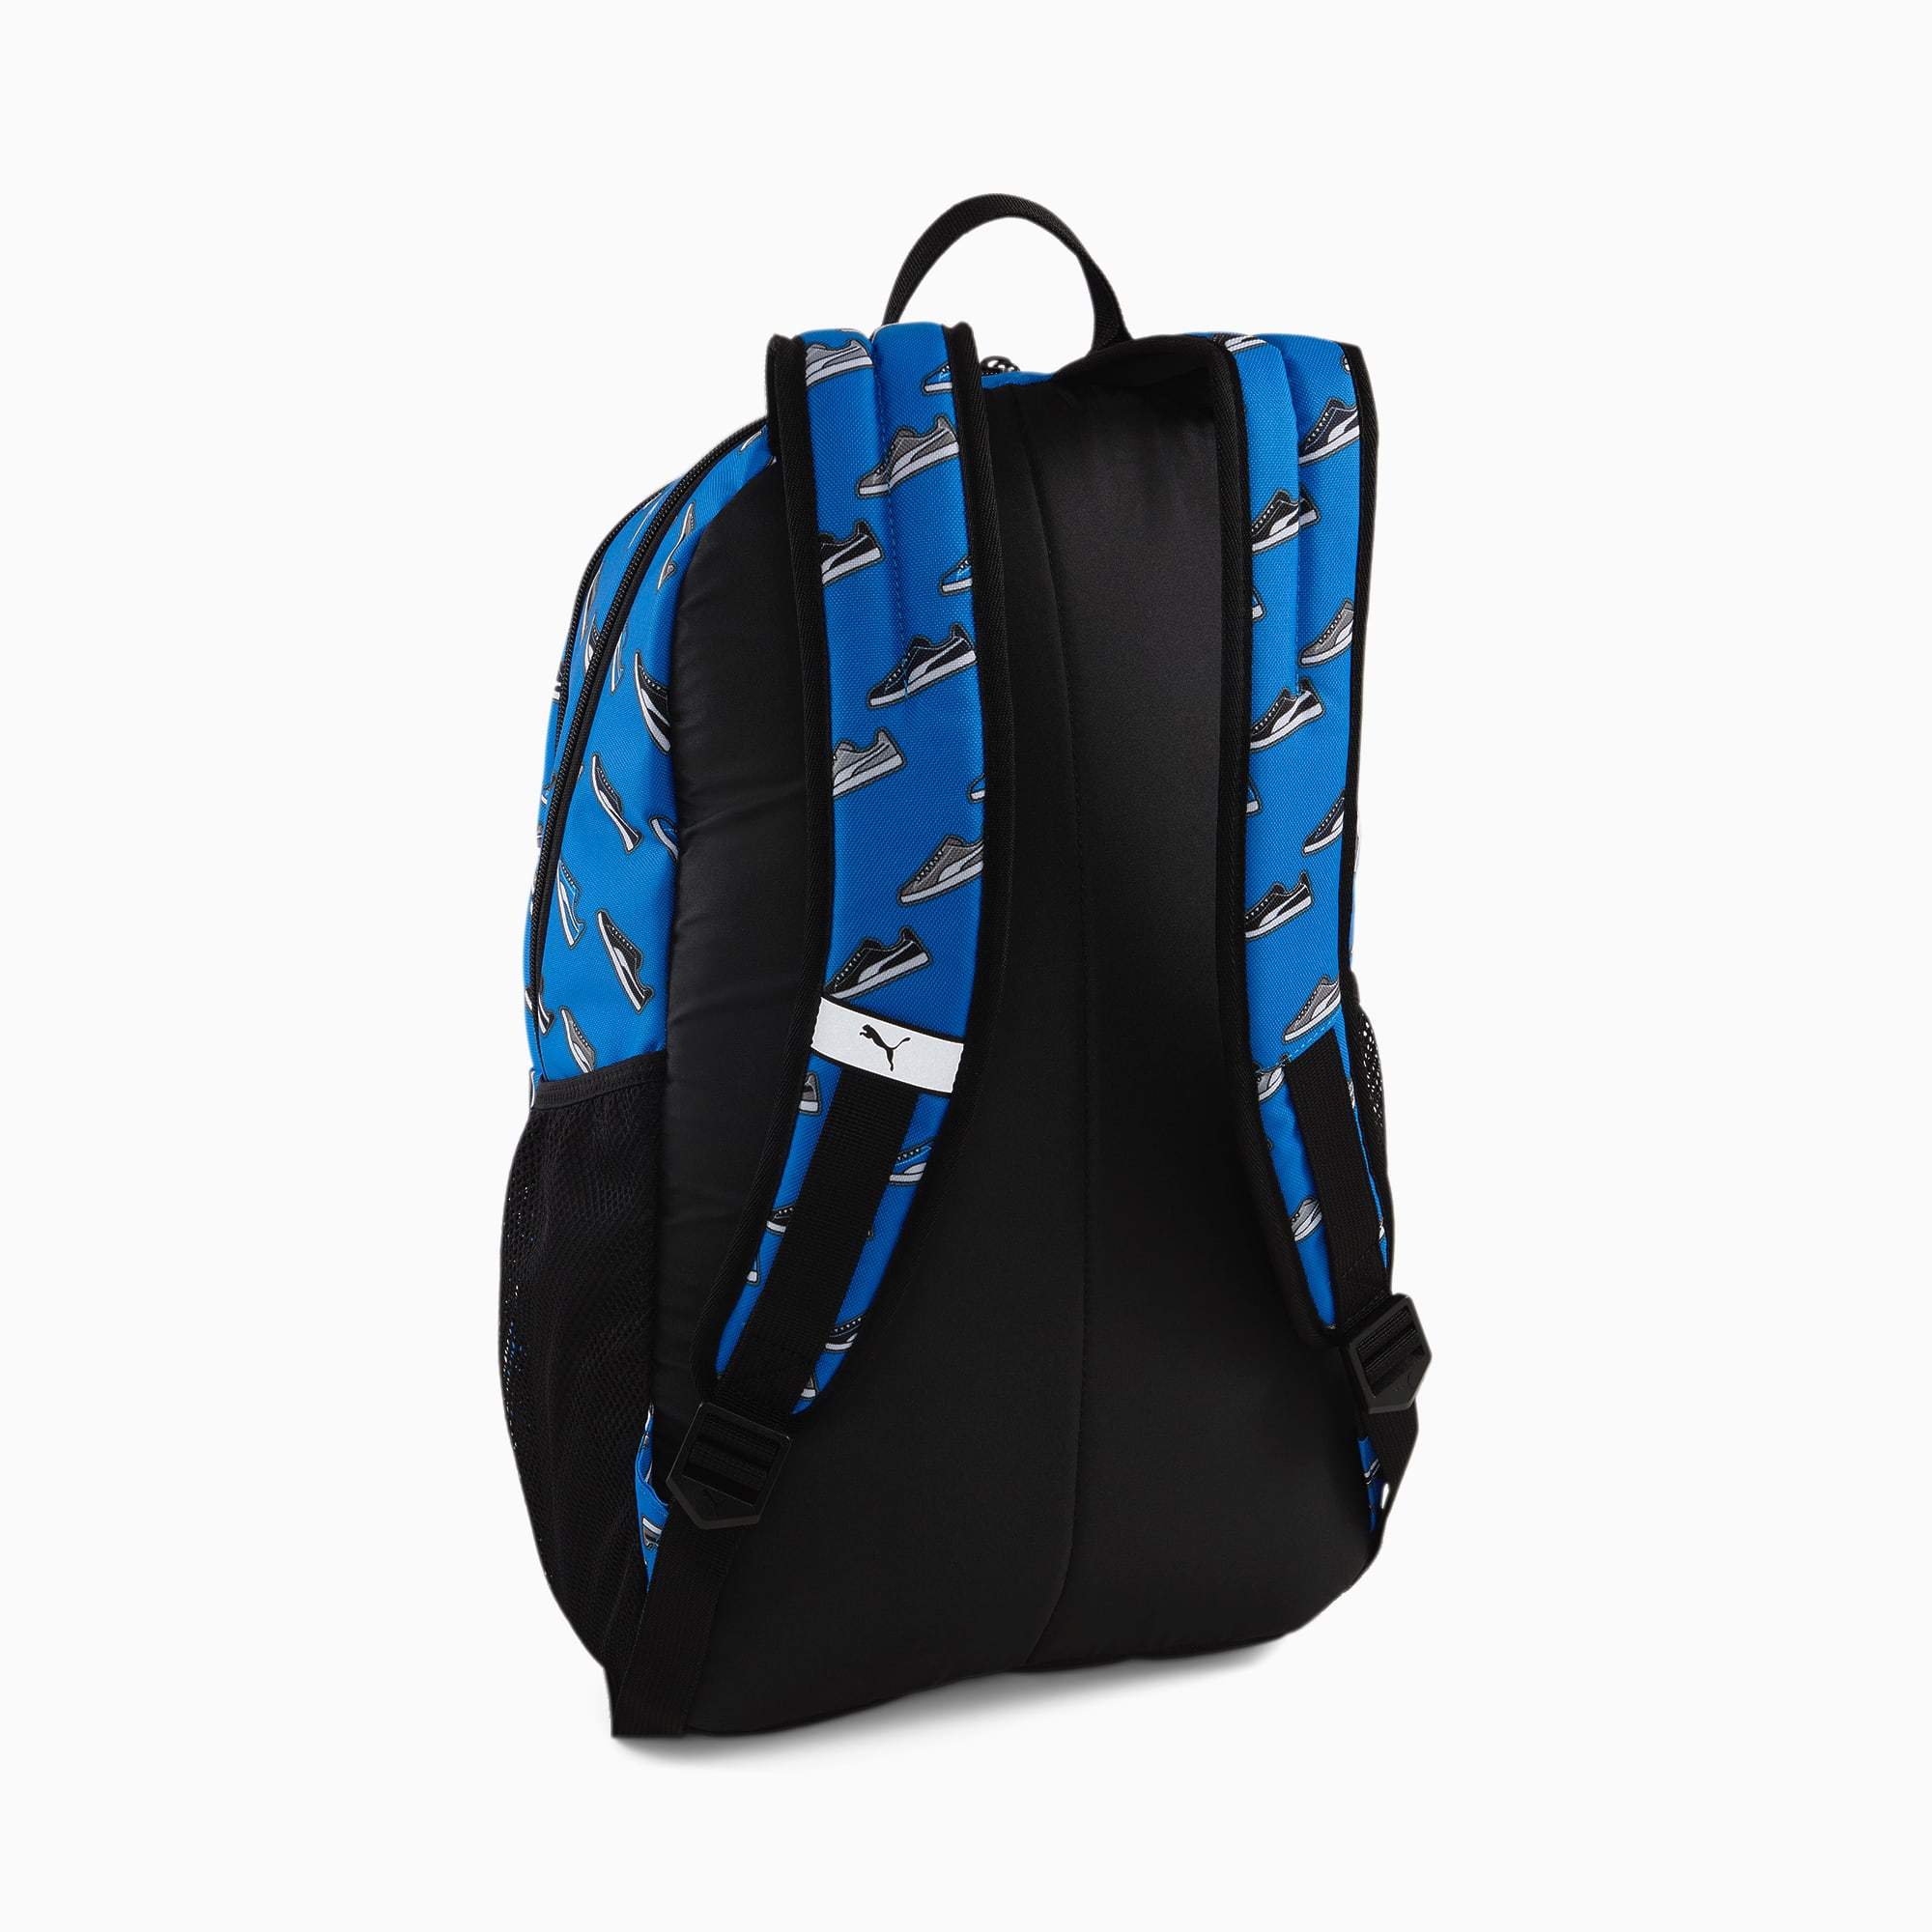 Women's PUMA Academy Backpack, Racing Blue/Sneaker AOP, Accessories